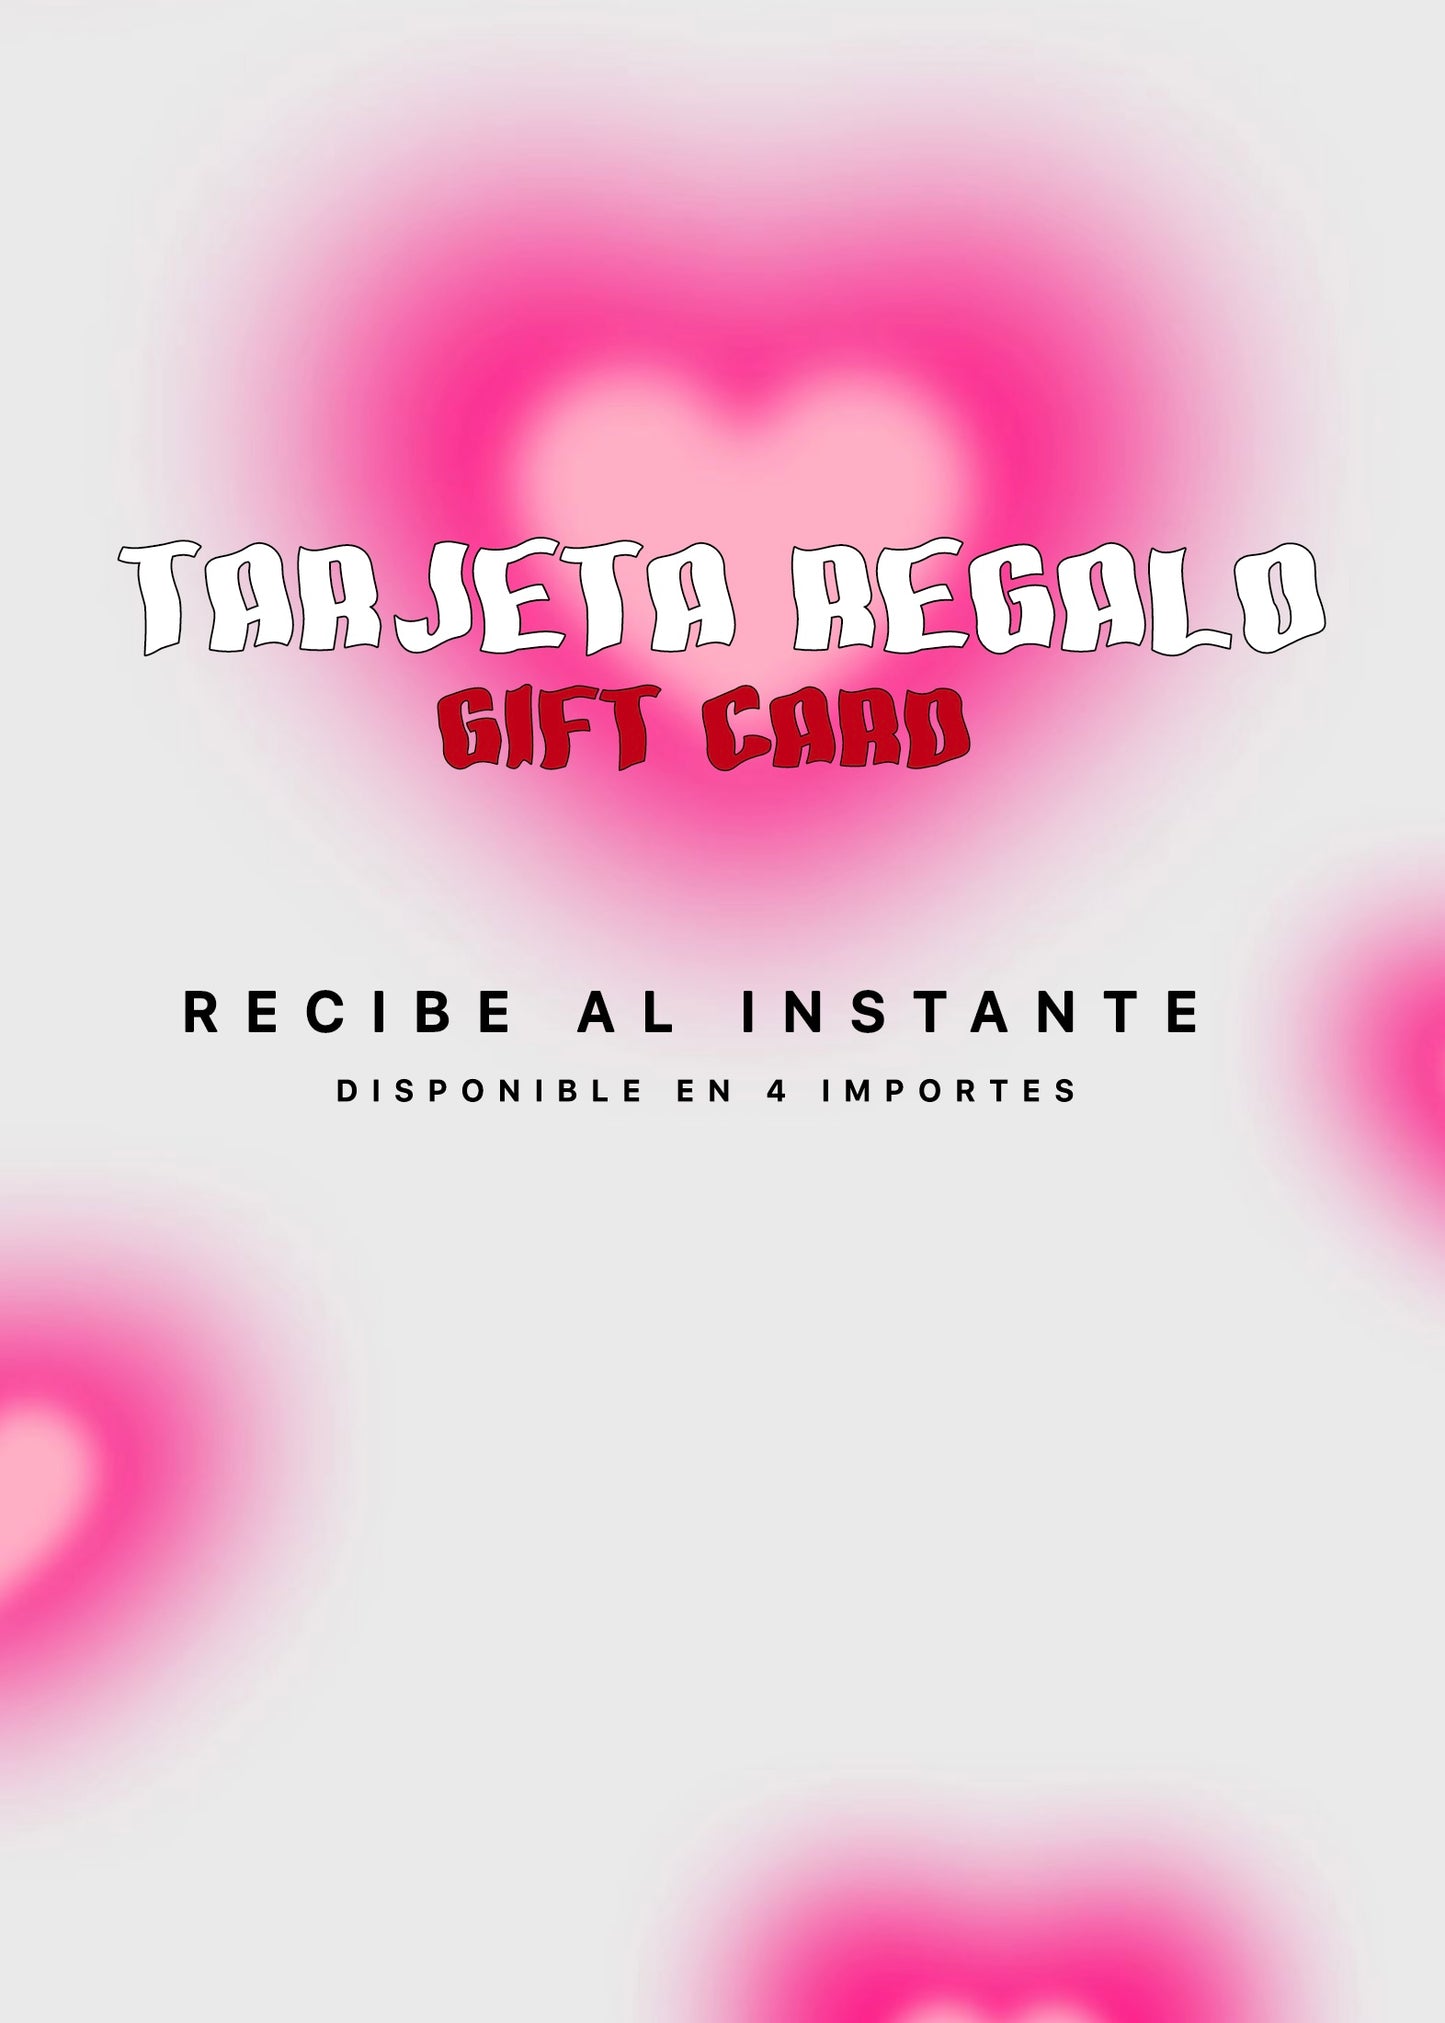 TARJETA REGALO ~ GIFT CARD